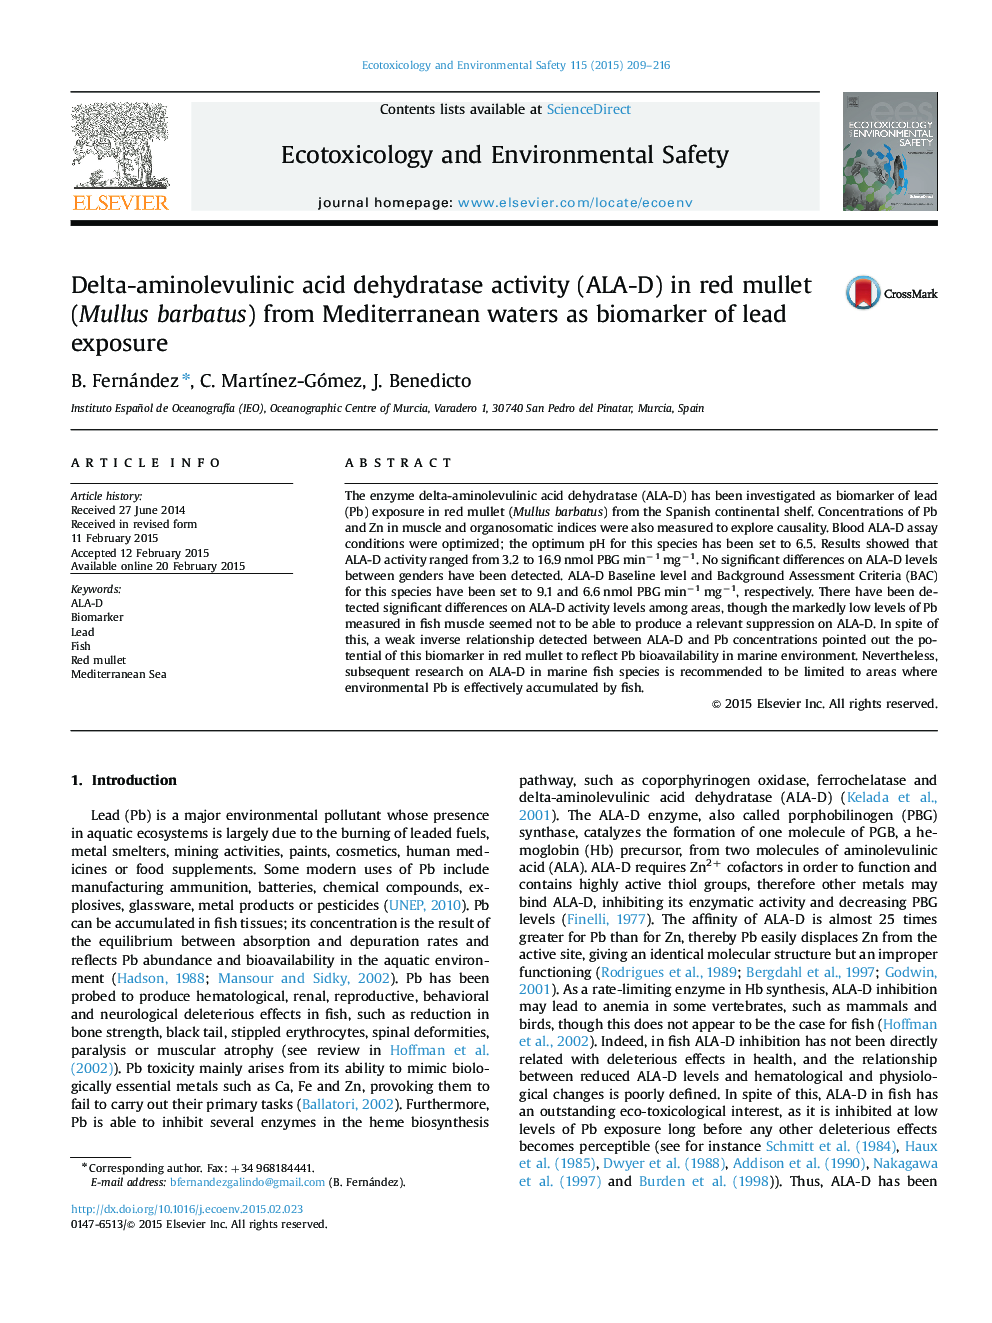 Delta-aminolevulinic acid dehydratase activity (ALA-D) in red mullet (Mullus barbatus) from Mediterranean waters as biomarker of lead exposure